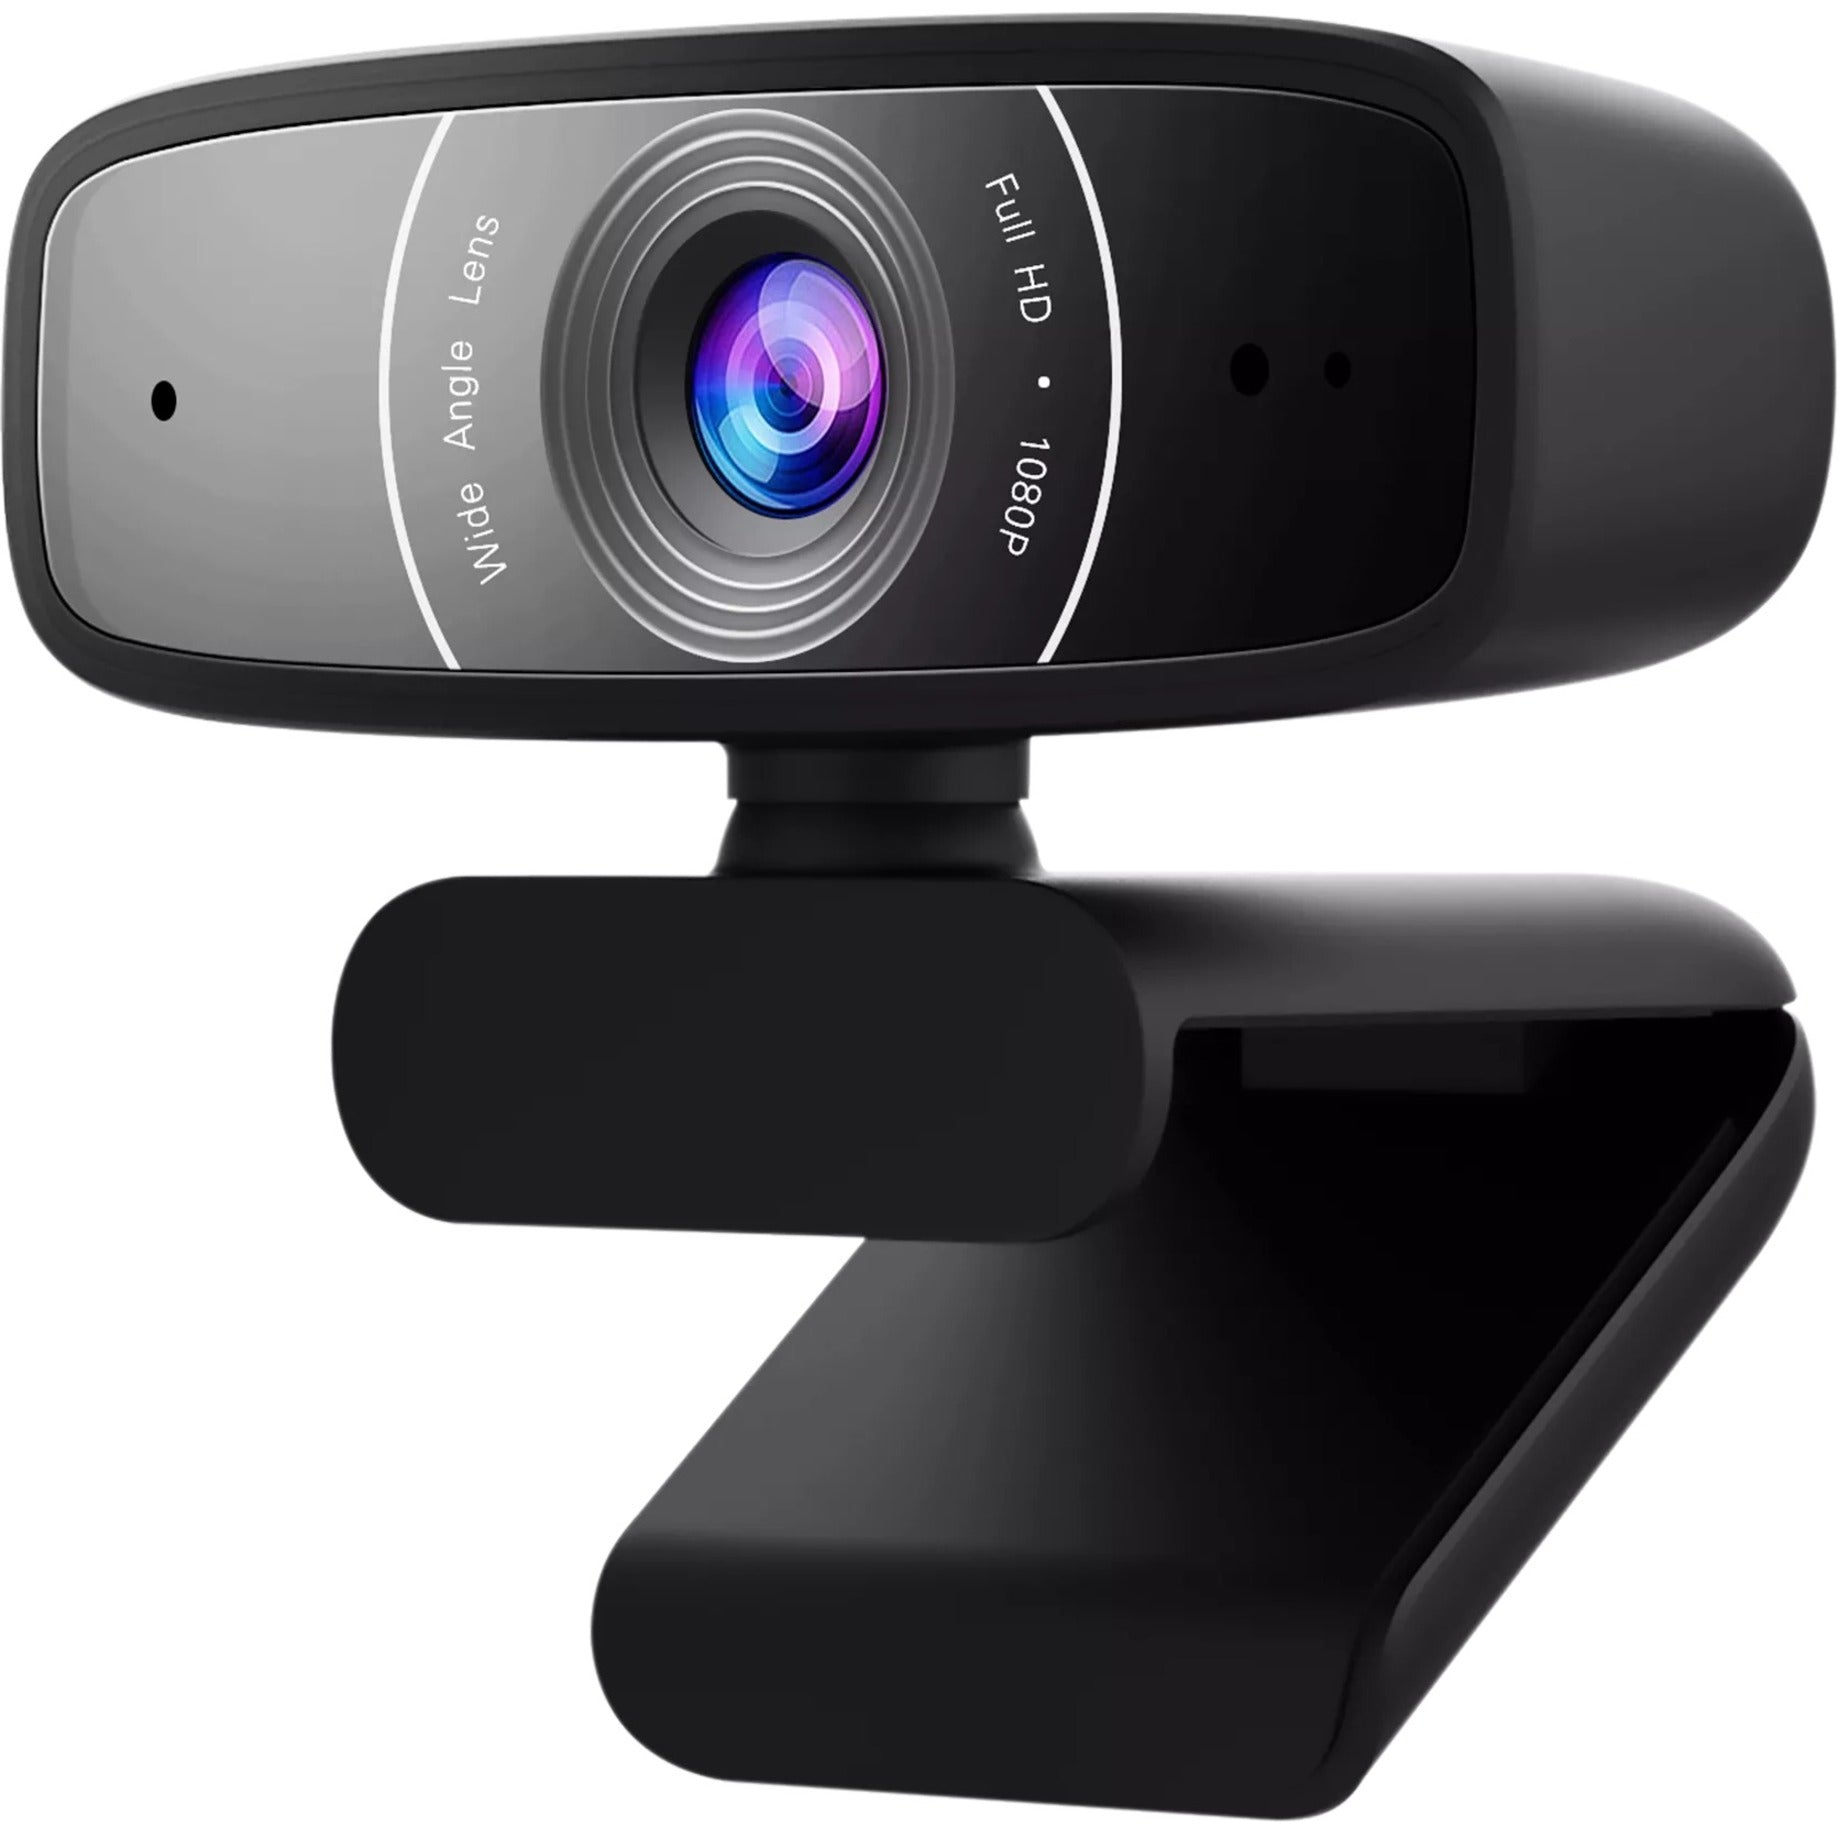 Asus ASUS WEBCAM C3 Webcam, 2 Megapixel, 30 fps, USB Type A